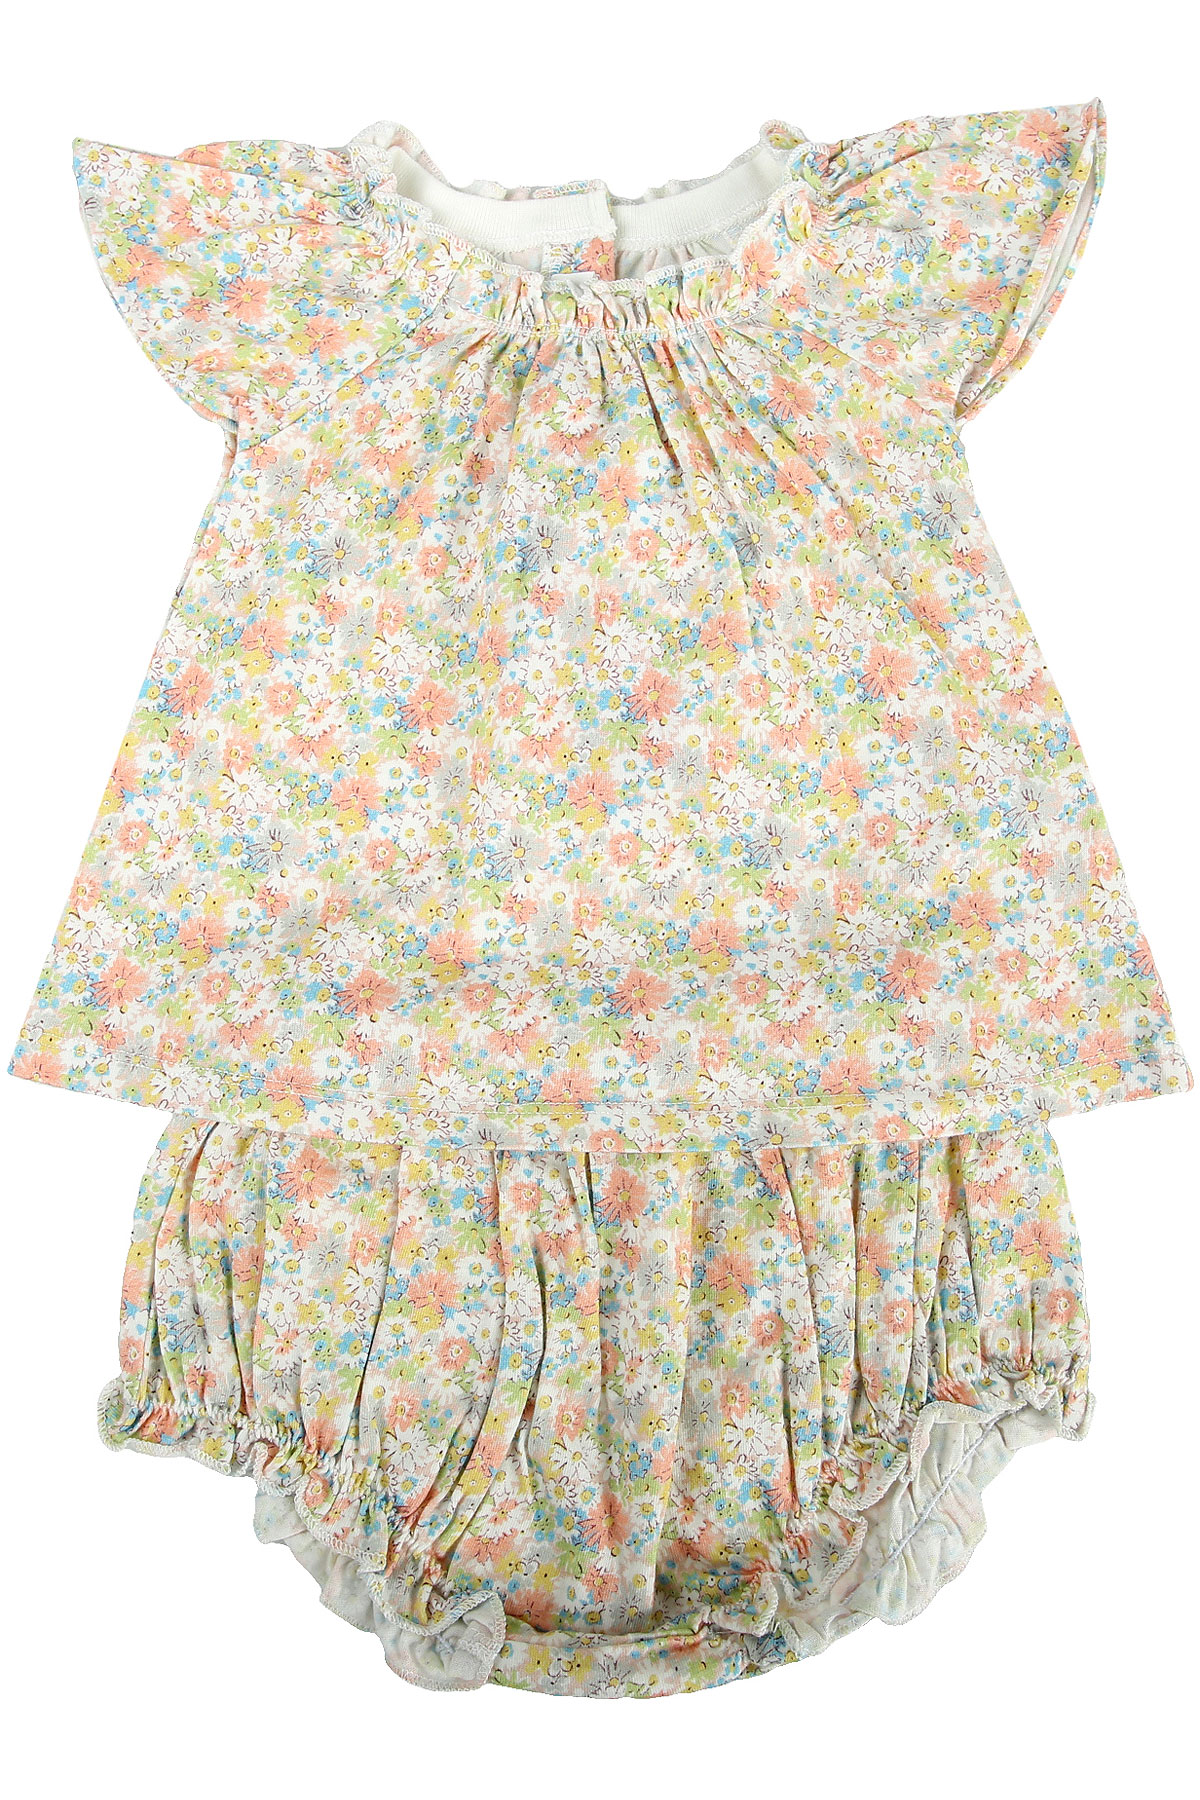 Baby Girl Clothing Bonpoint, Style code: s01xsekn0501-522d-